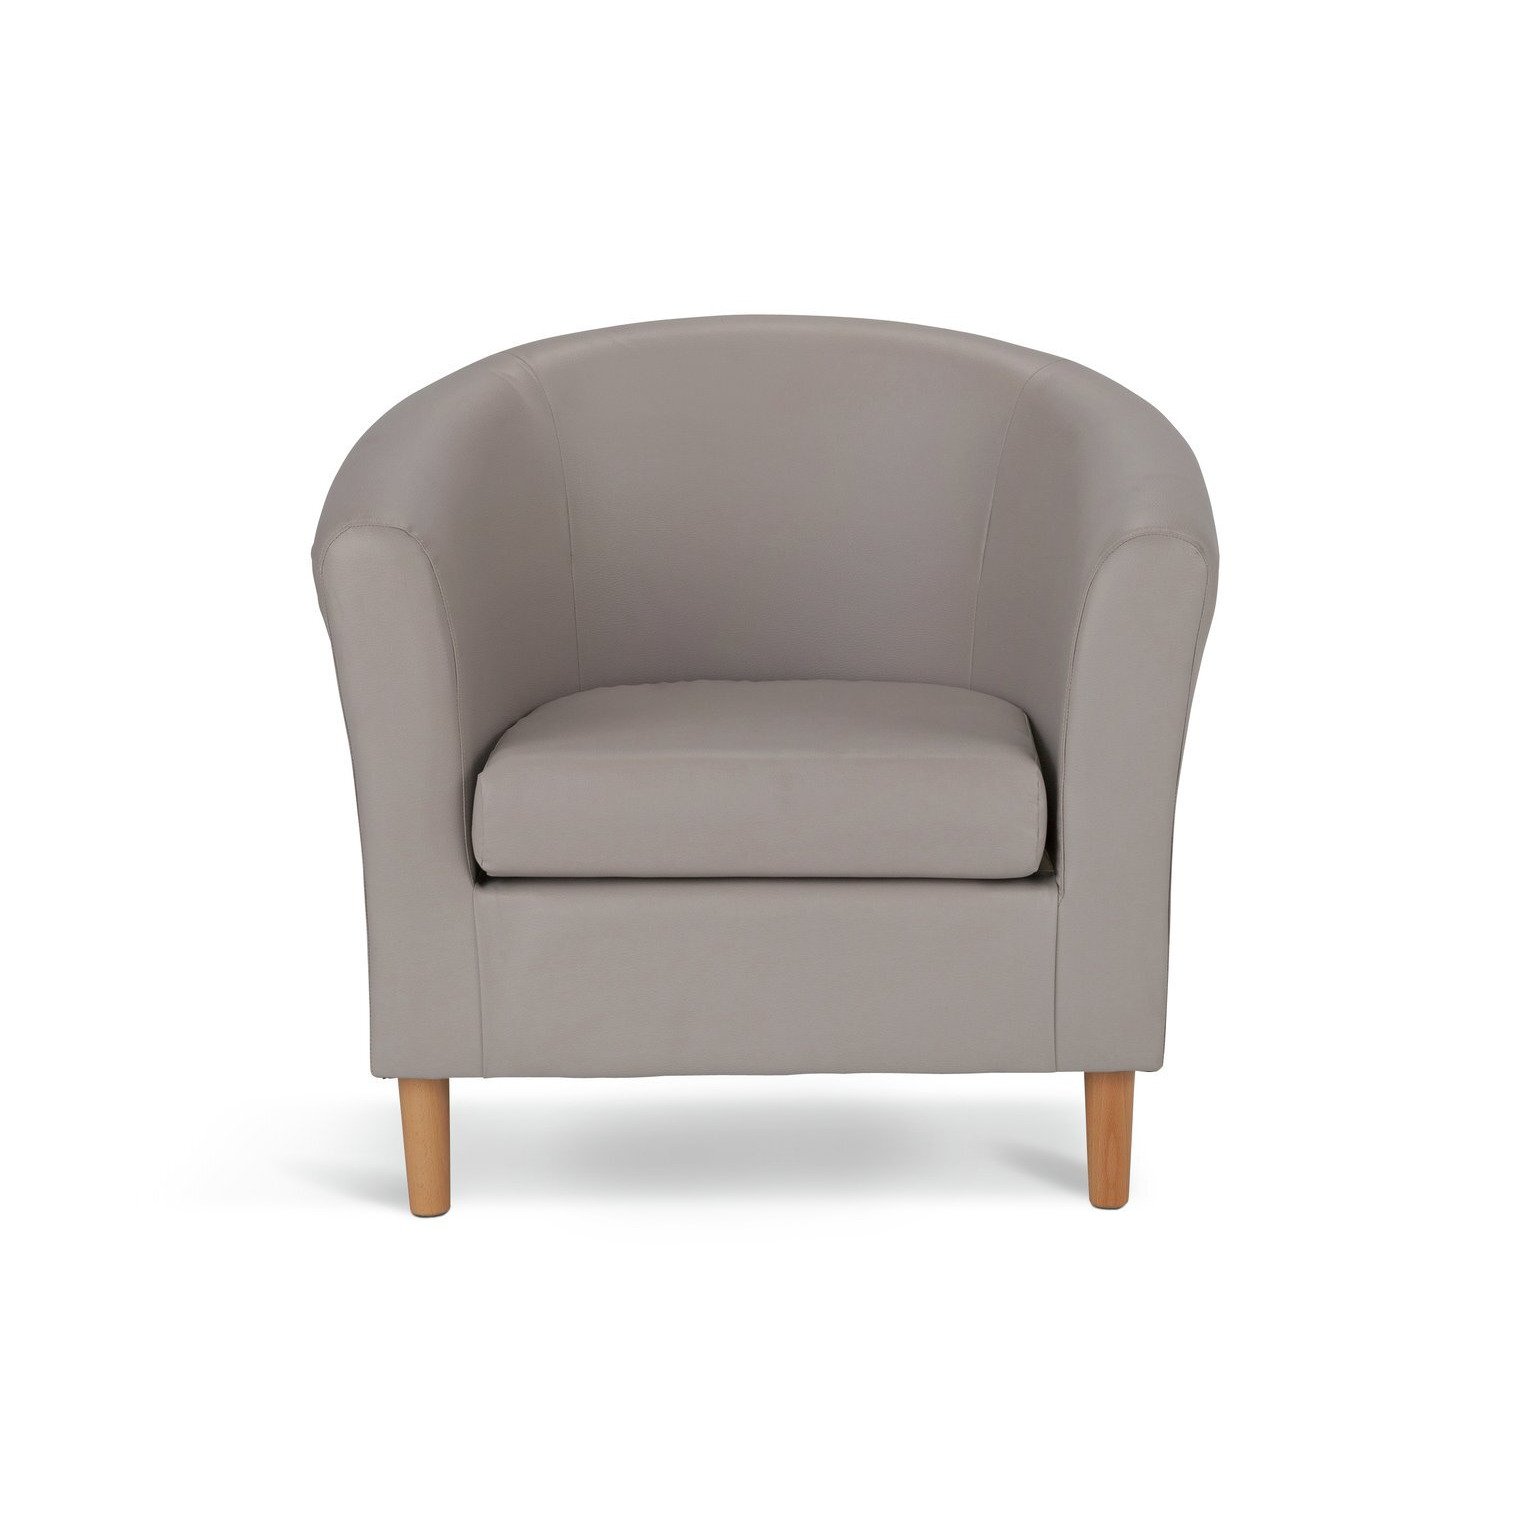 Argos Home Faux Leather Tub Chair - Mocha - image 1